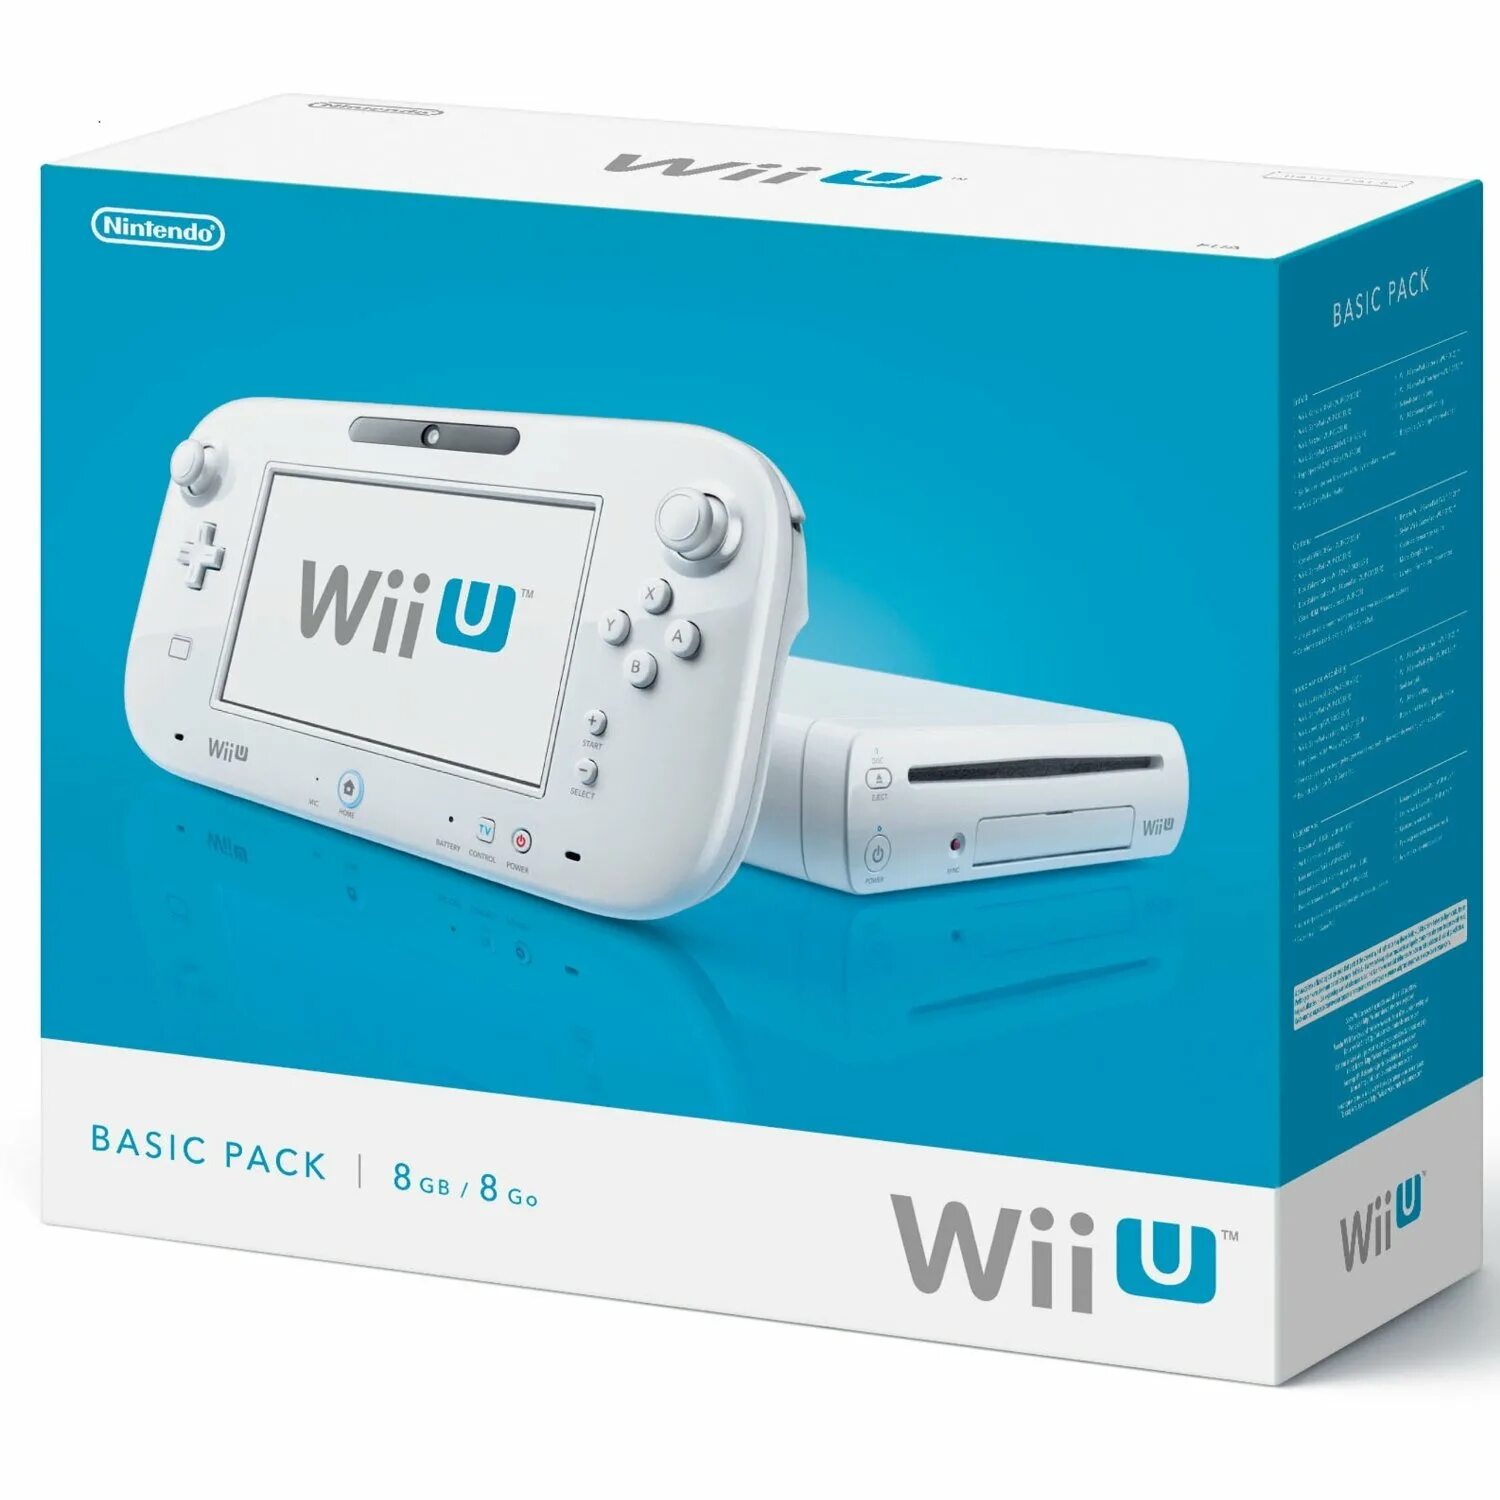 Nintendo купить приставку. Игровая приставка Nintendo Wii u. Игровой консоль Nintendo Wii u Premium Pack. Приставка Нинтендо Wii. Нинтендо Wii u.